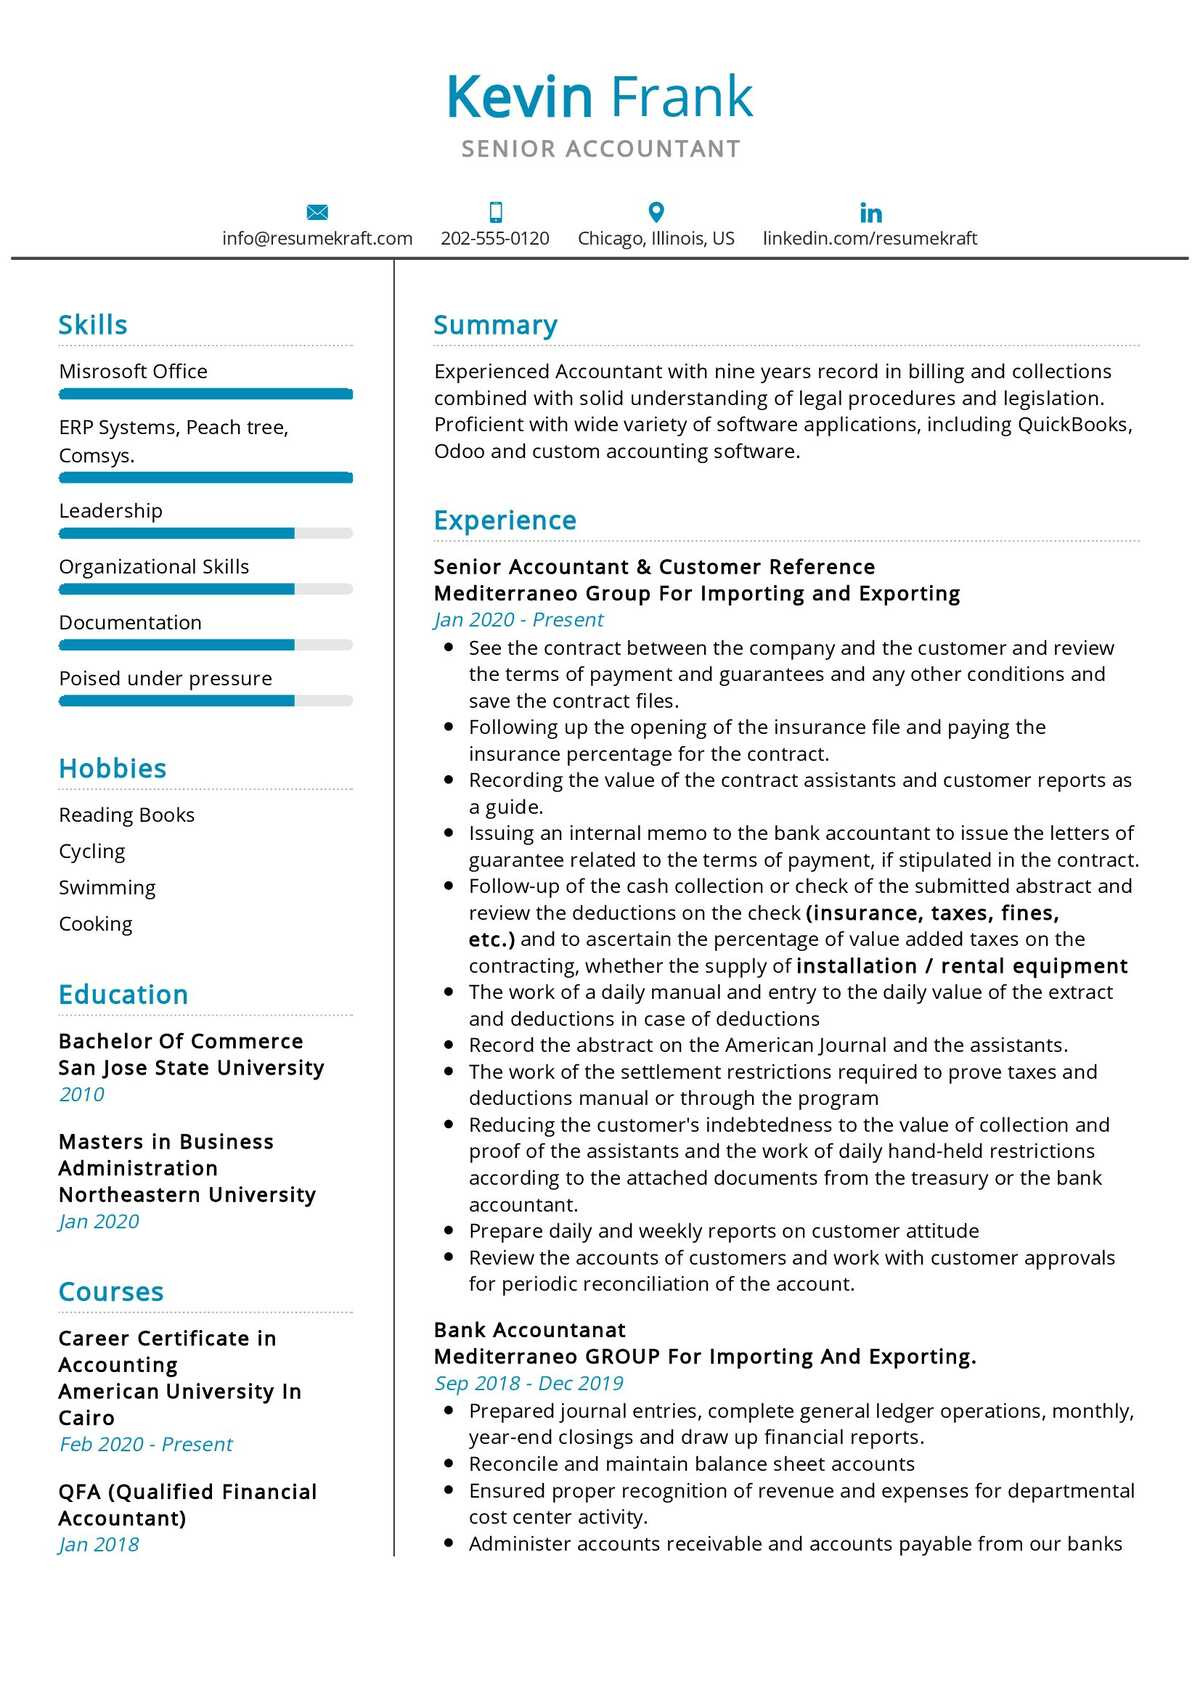 Professional Summary Resume Sample for Accountant Senior Accountant Resume Example 2021 Writing Guide – Resumekraft